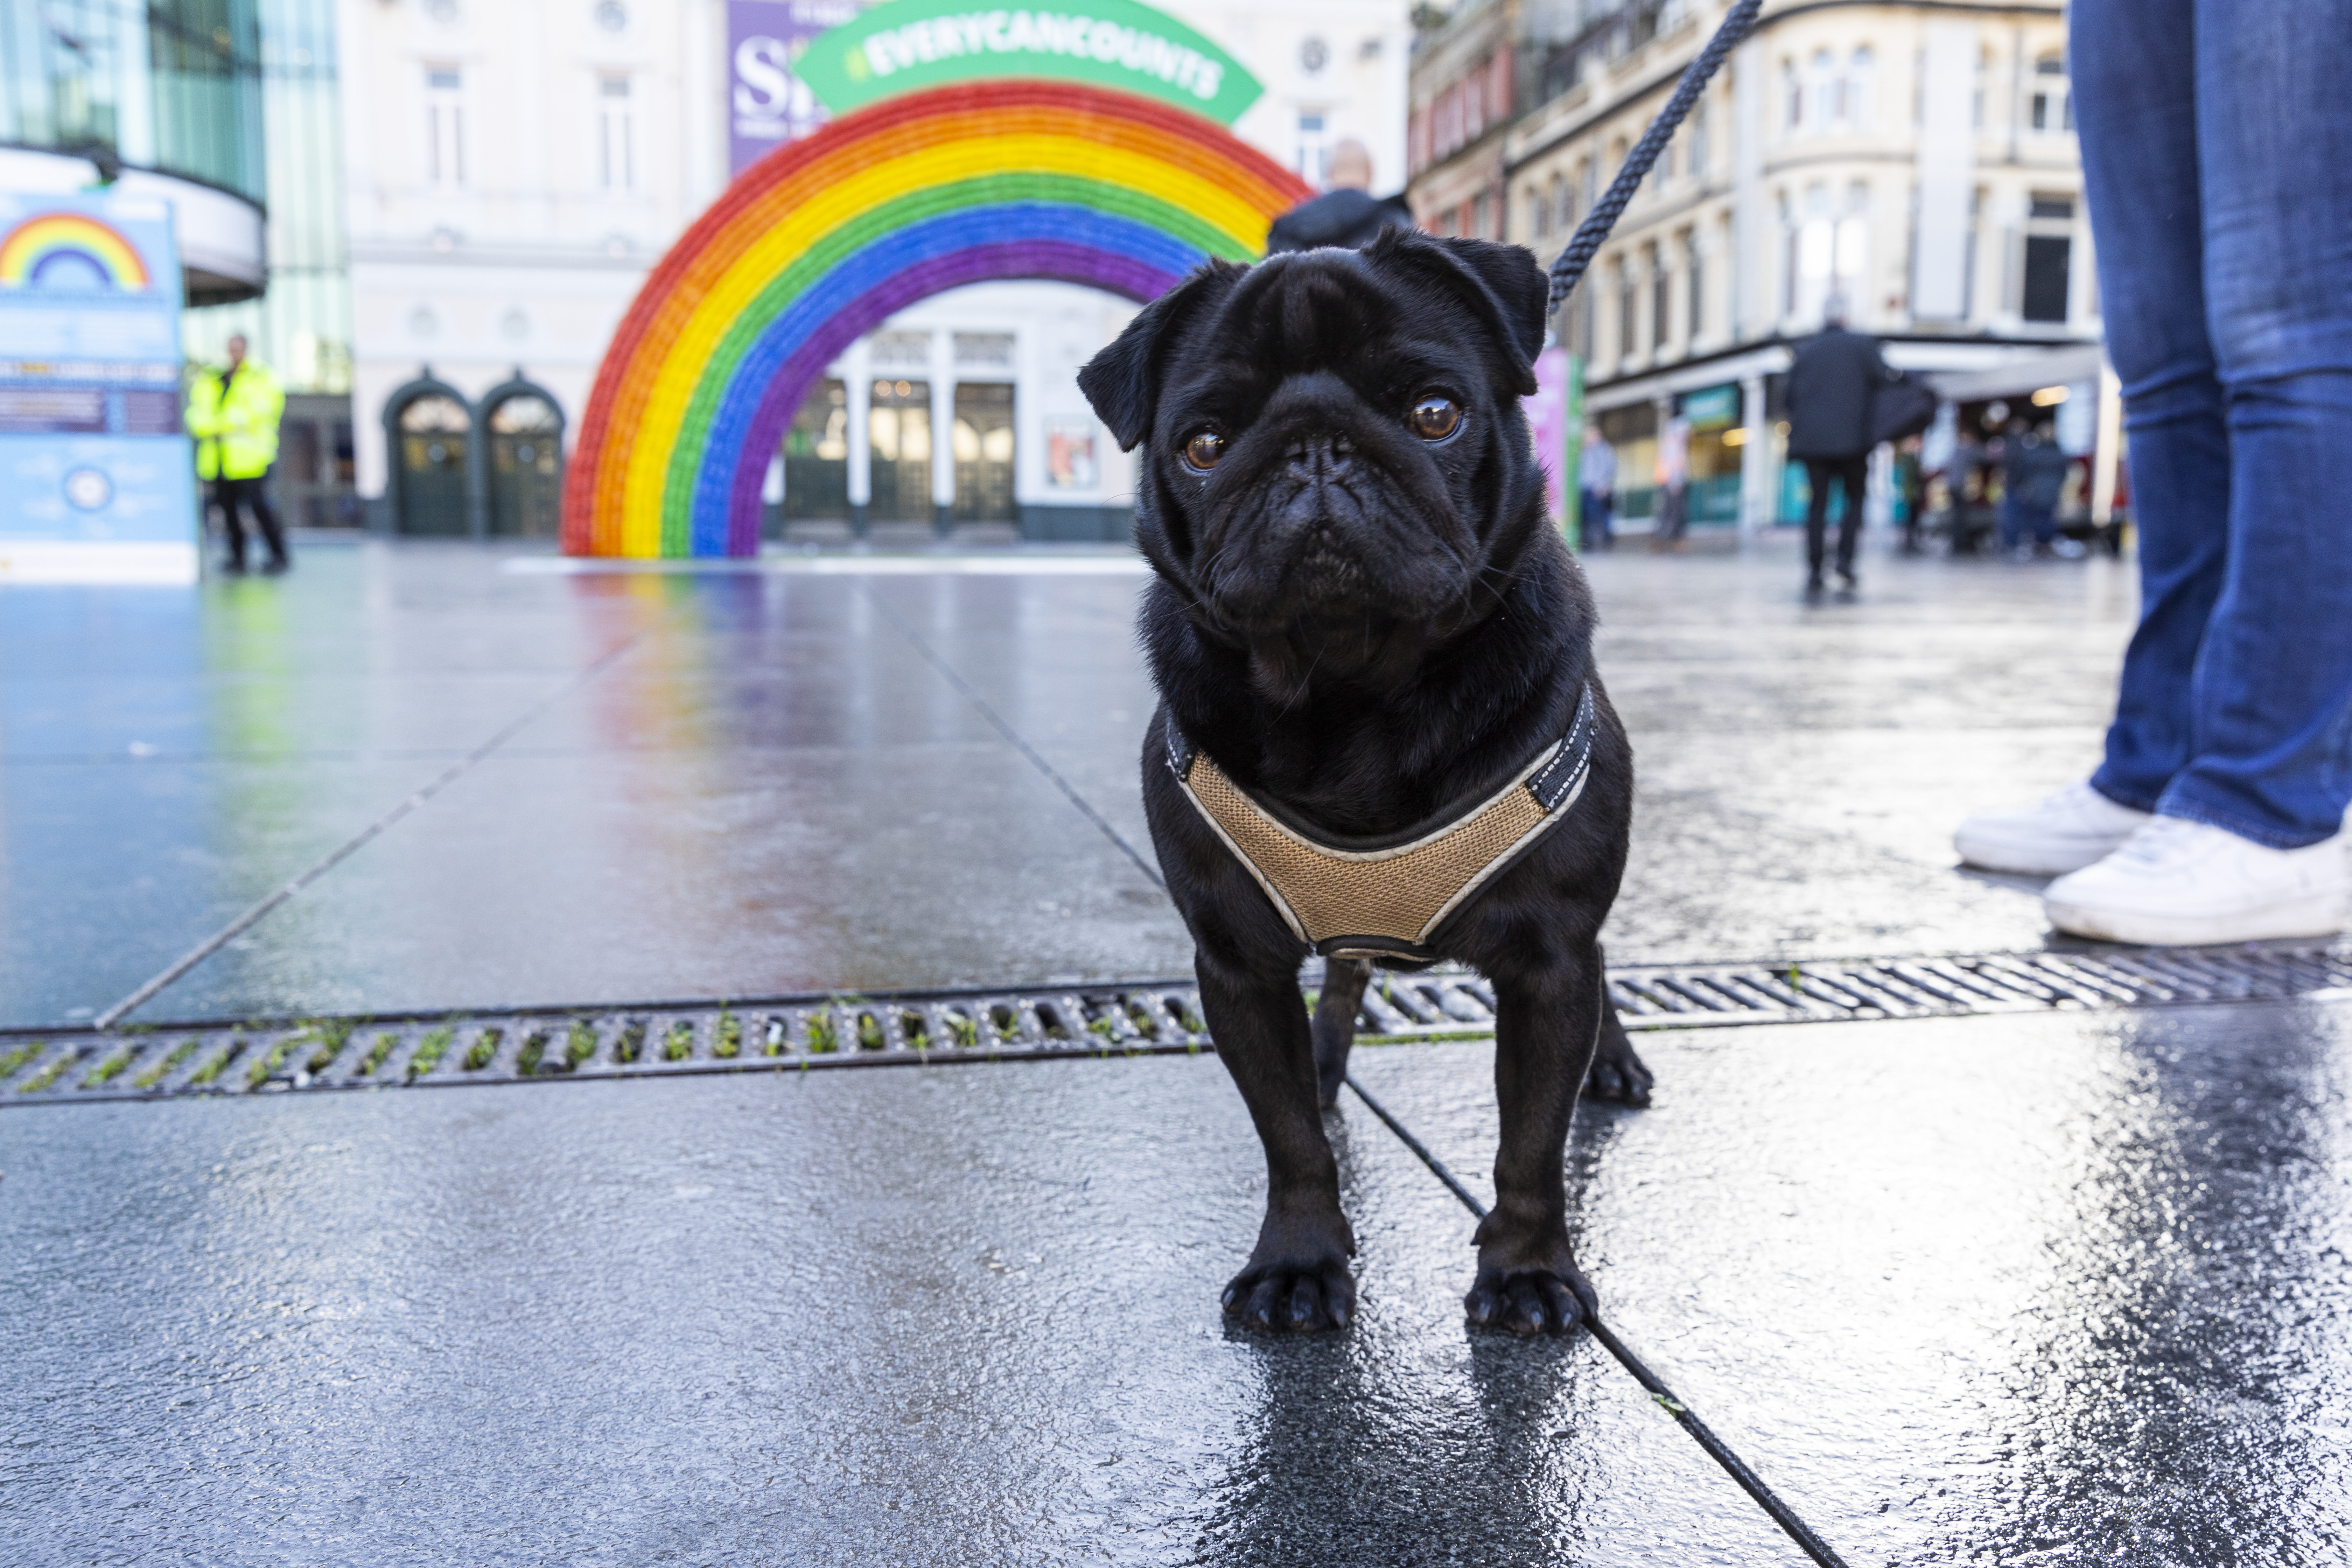 Dog Bruno poses for a photo near the #EveryCanCounts rainbow.